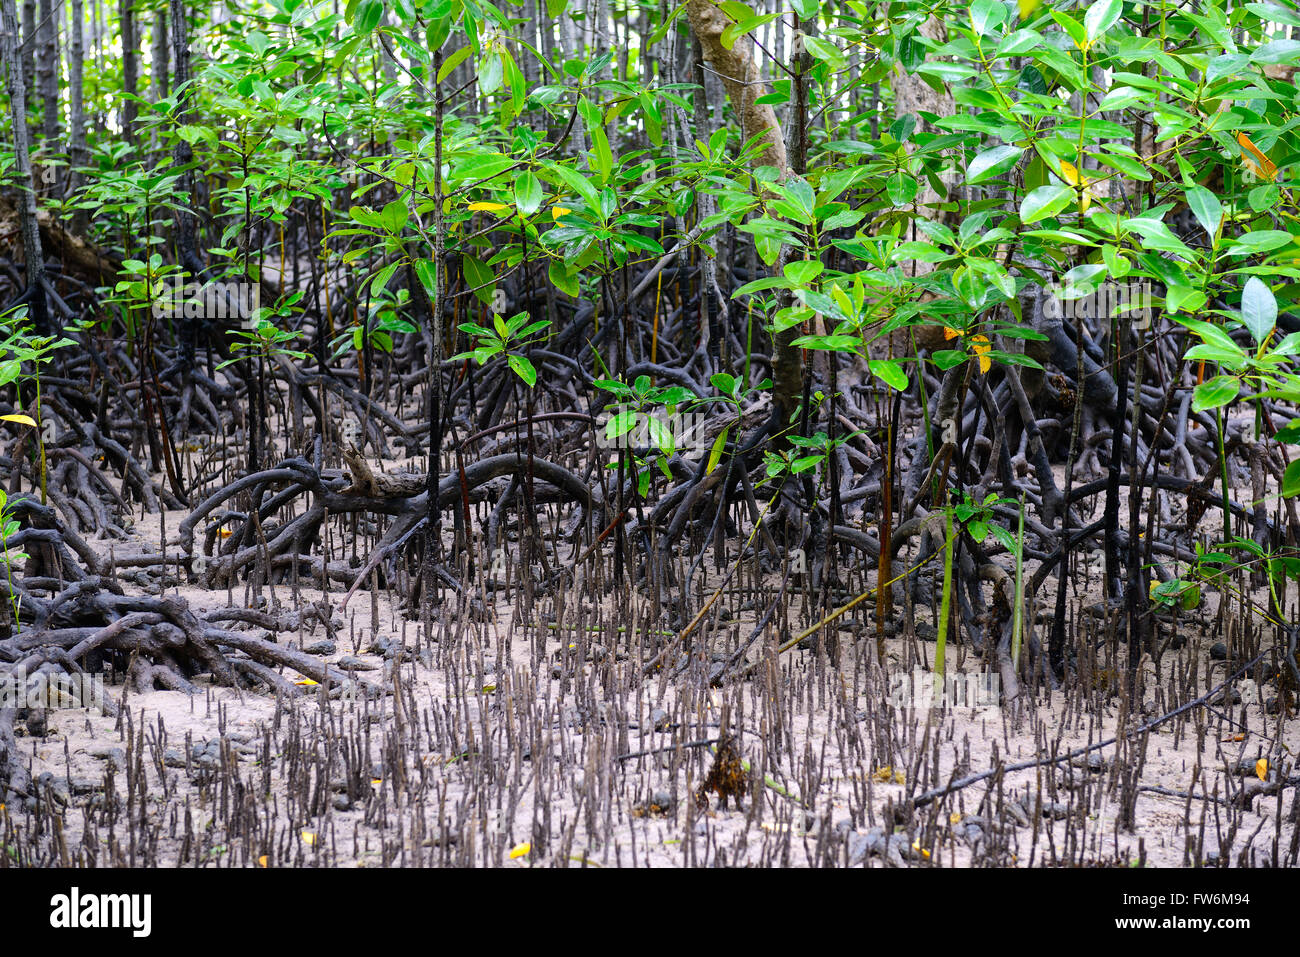 Mangroven (Avicennia marina) bei ebbe, Insel Curieuse, Seychellen Foto Stock